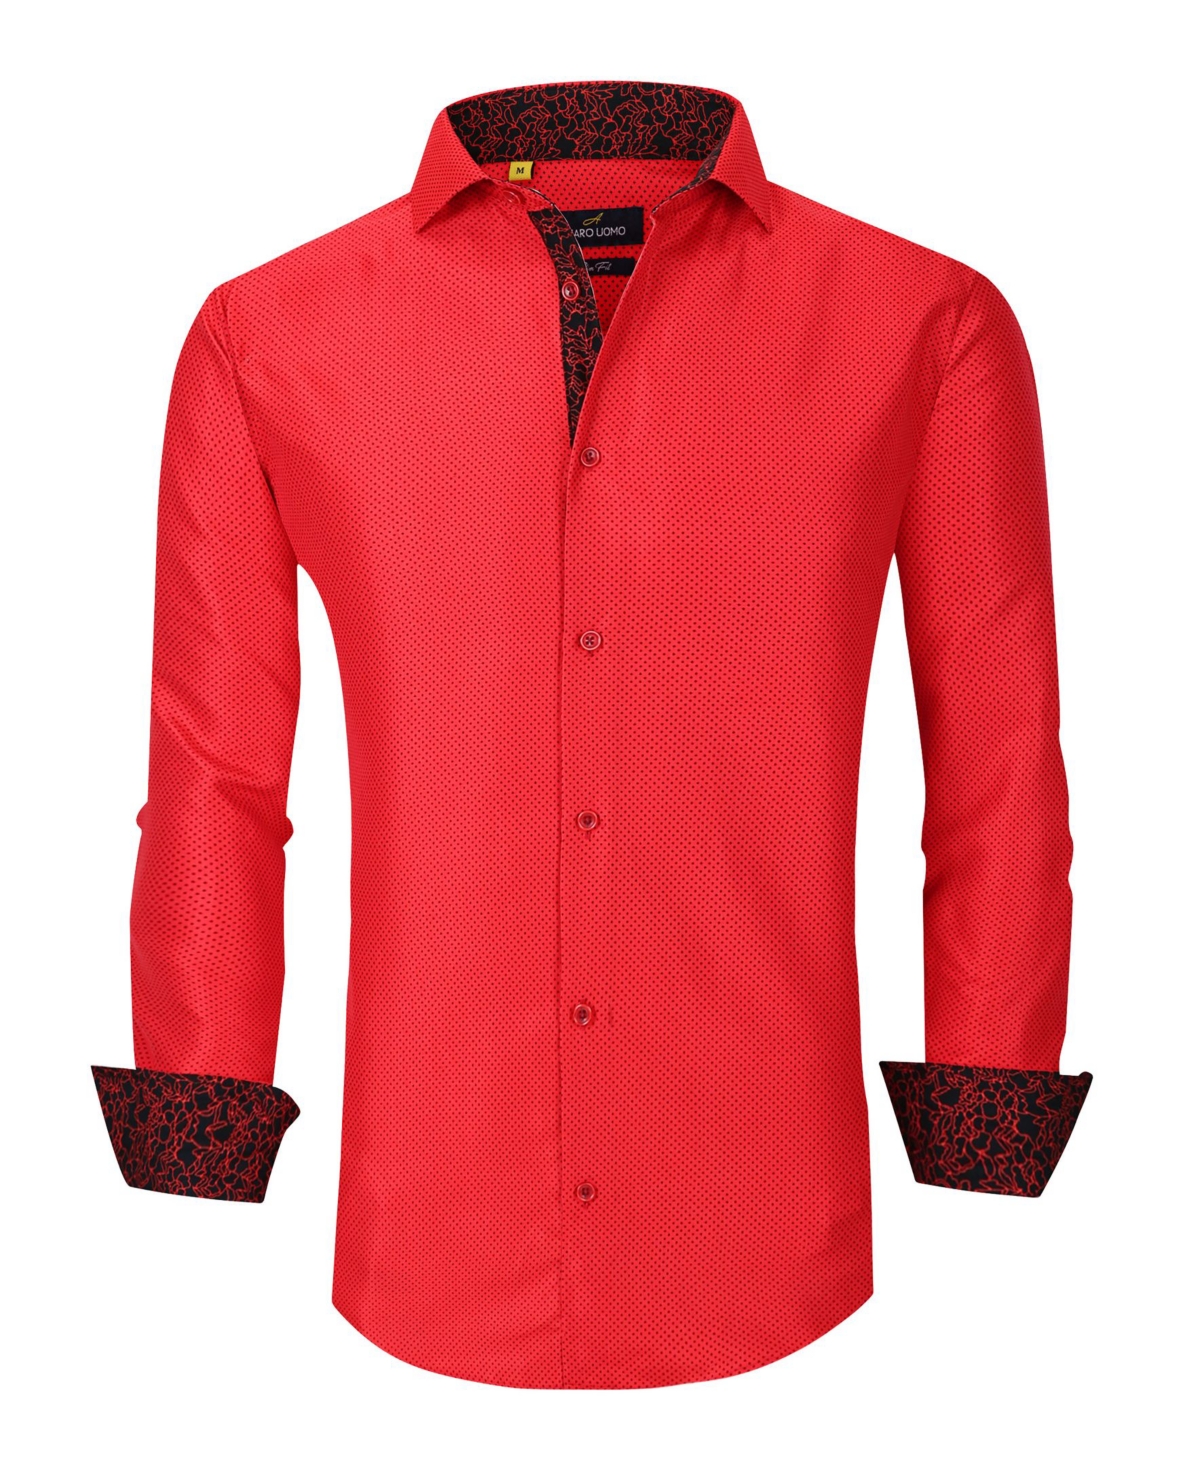 Men's Slim Fit Business Nautical Button Down Dress Shirt - Red Polka Dot